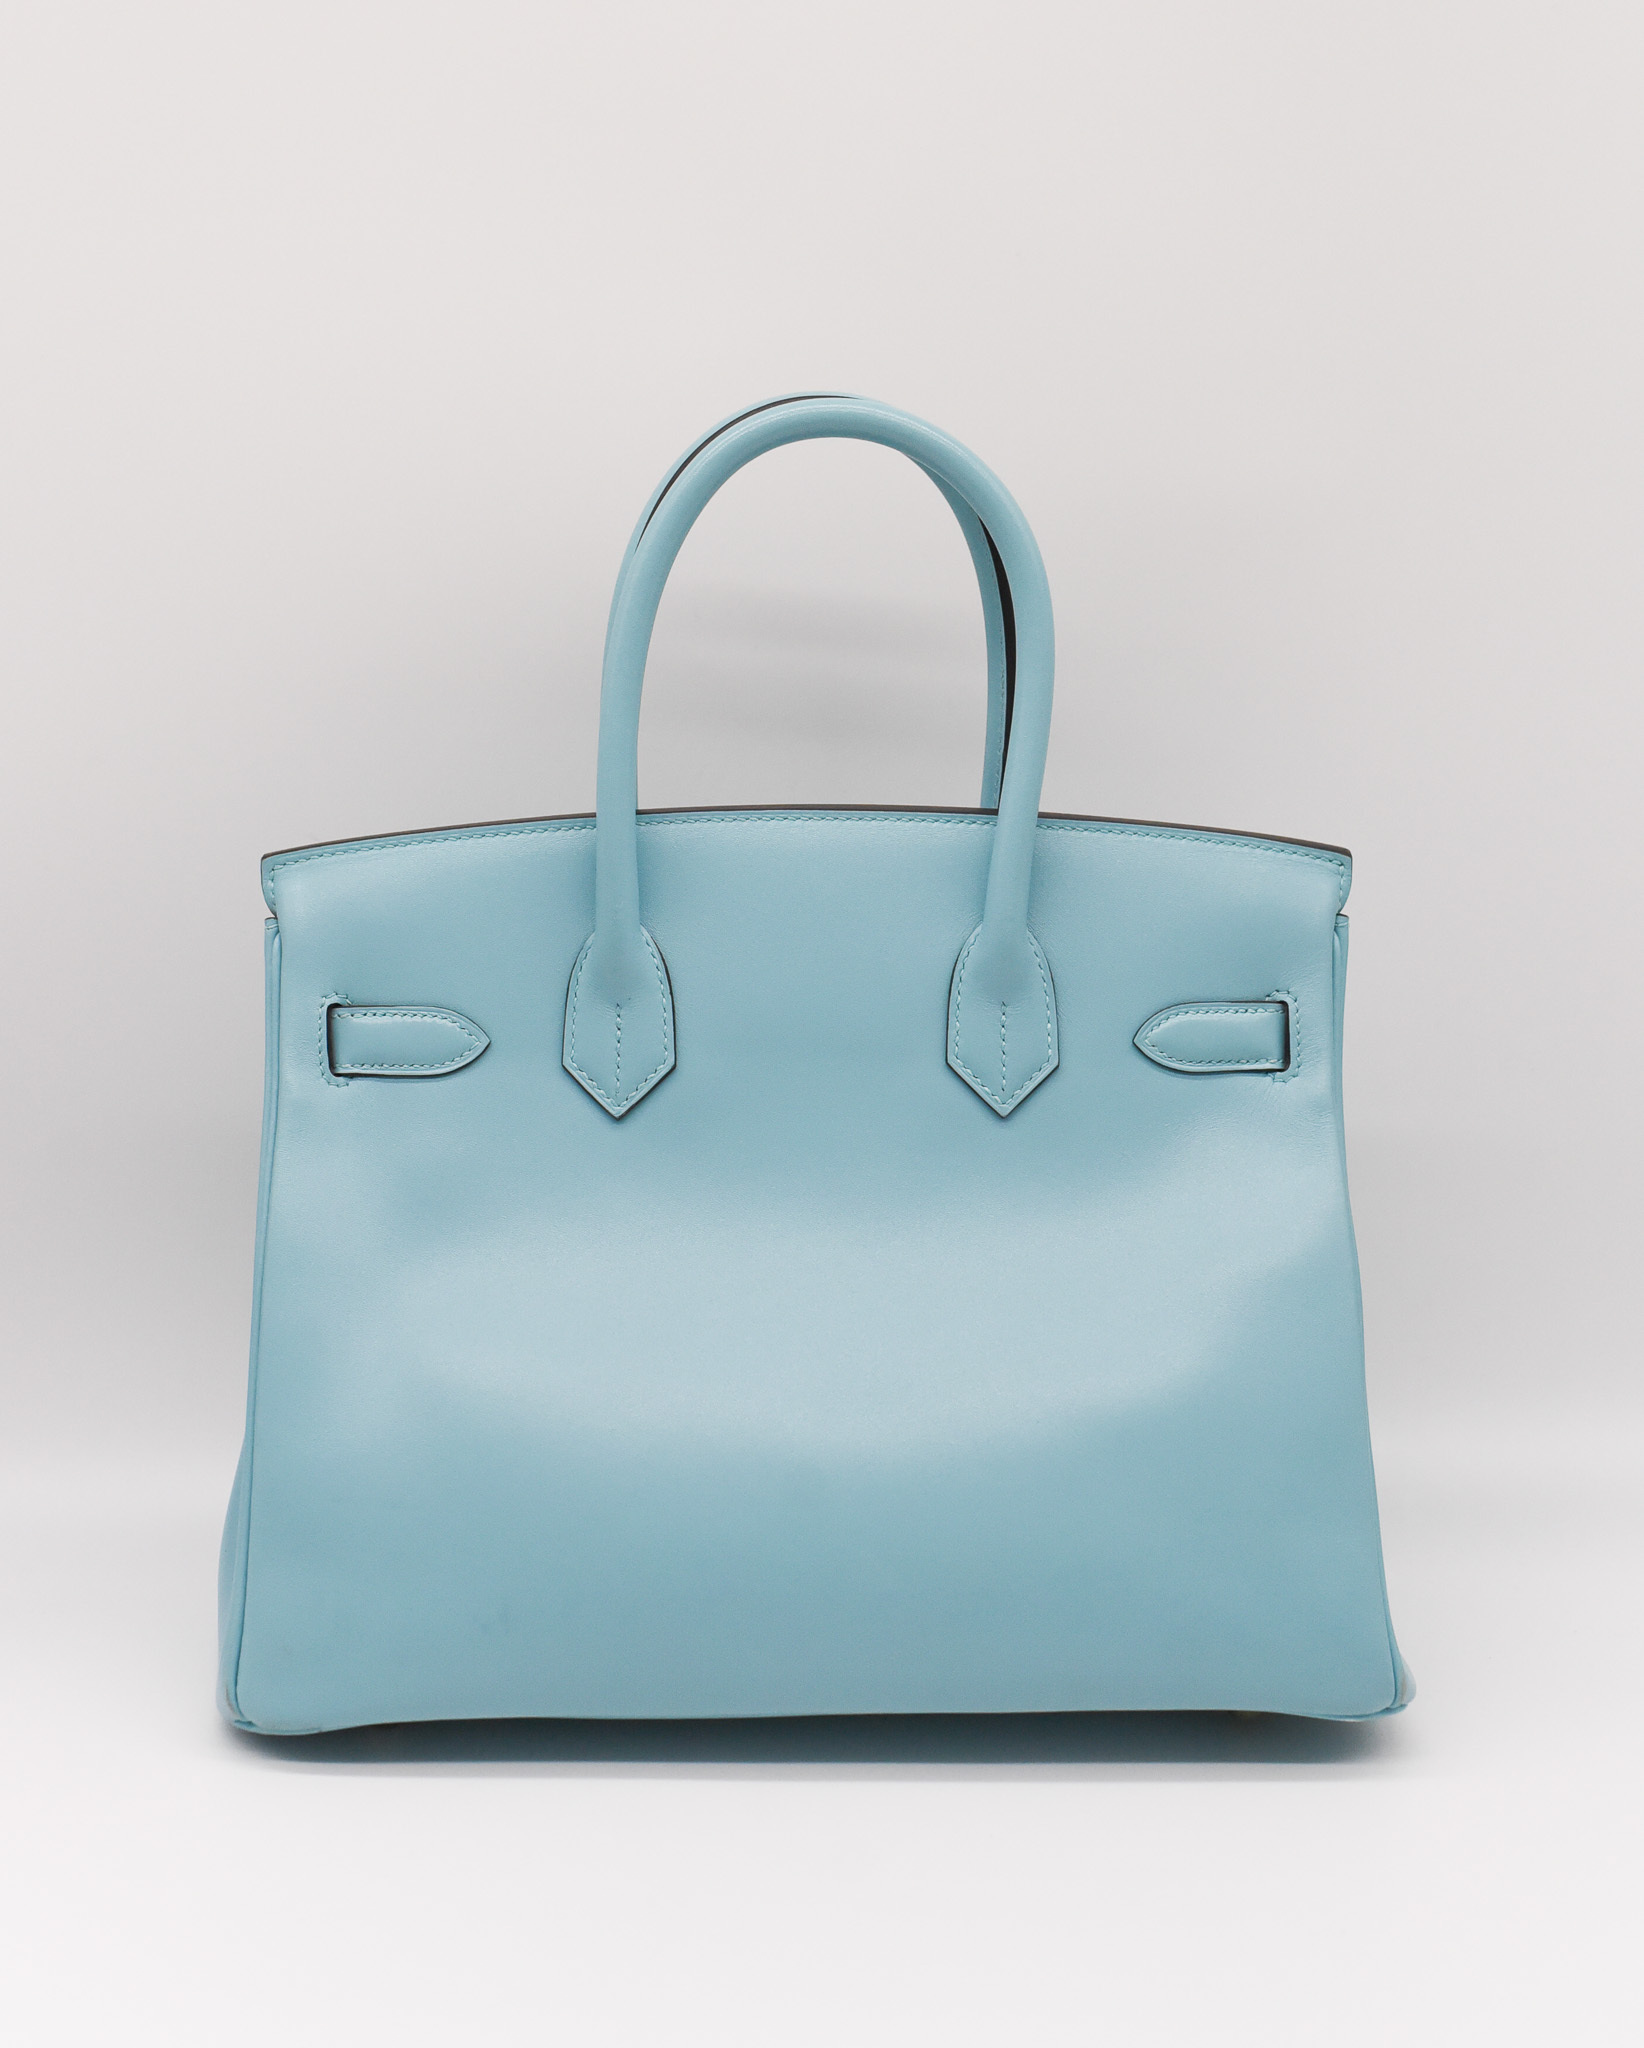 Hermès Vintage - Swift Birkin 30 - Light Gray - Leather Handbag - Avvenice